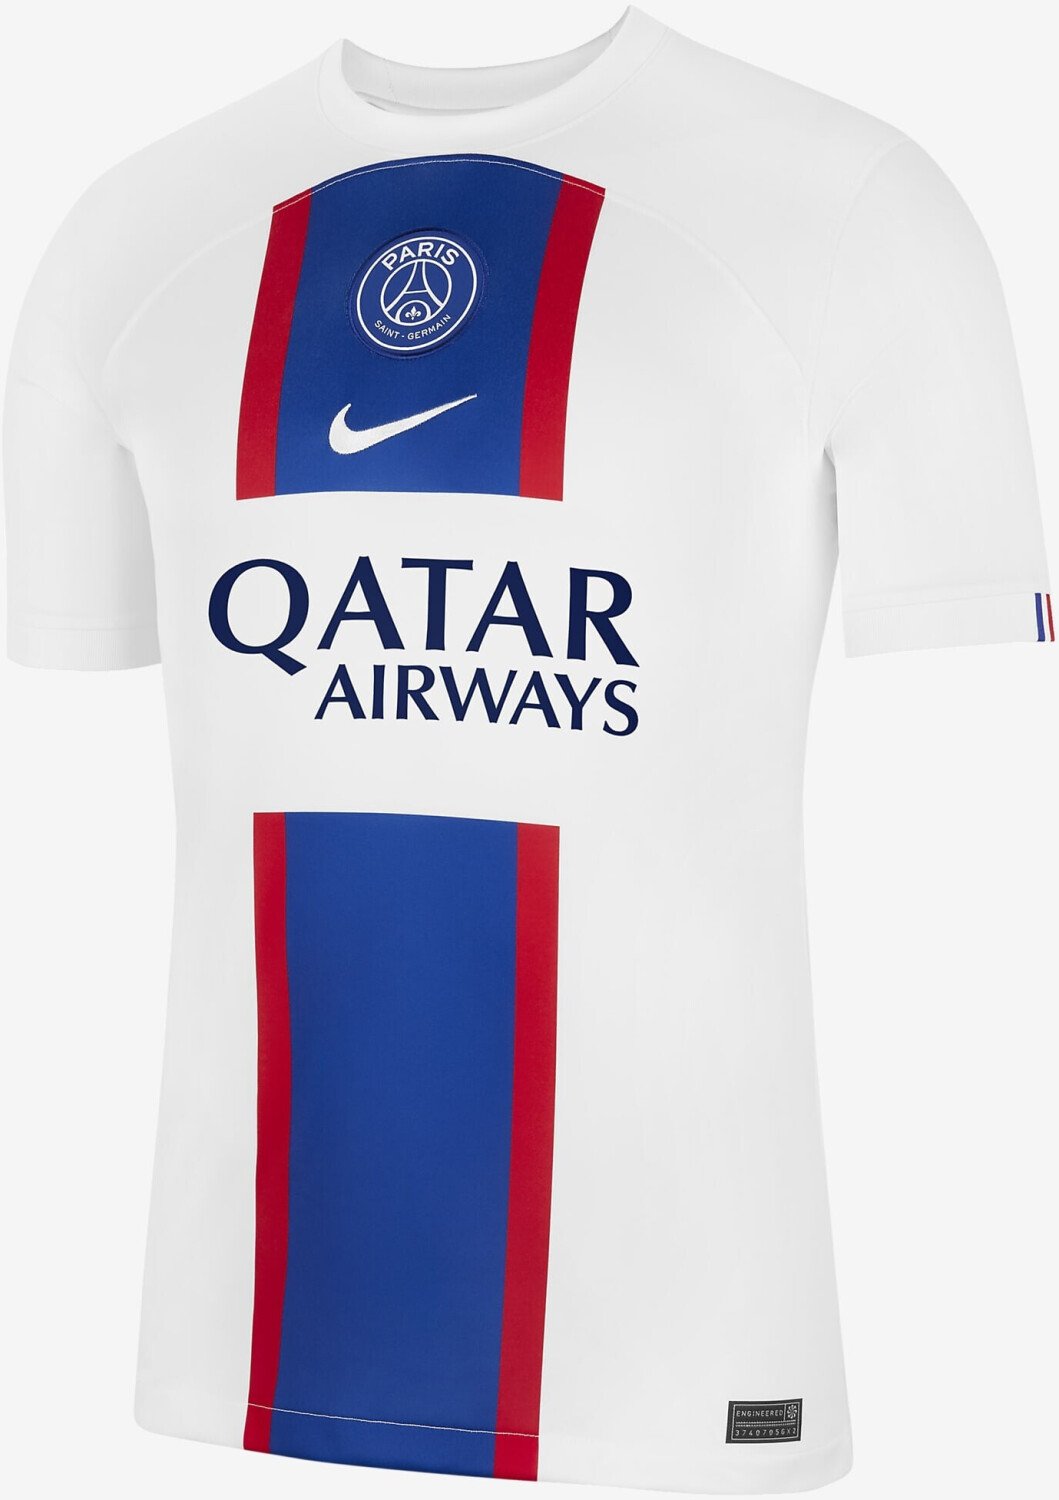 Opresor sólido Capataz Nike Paris Saint Germain Shirt 2022/2023 desde 49,99 € | Compara precios en  idealo